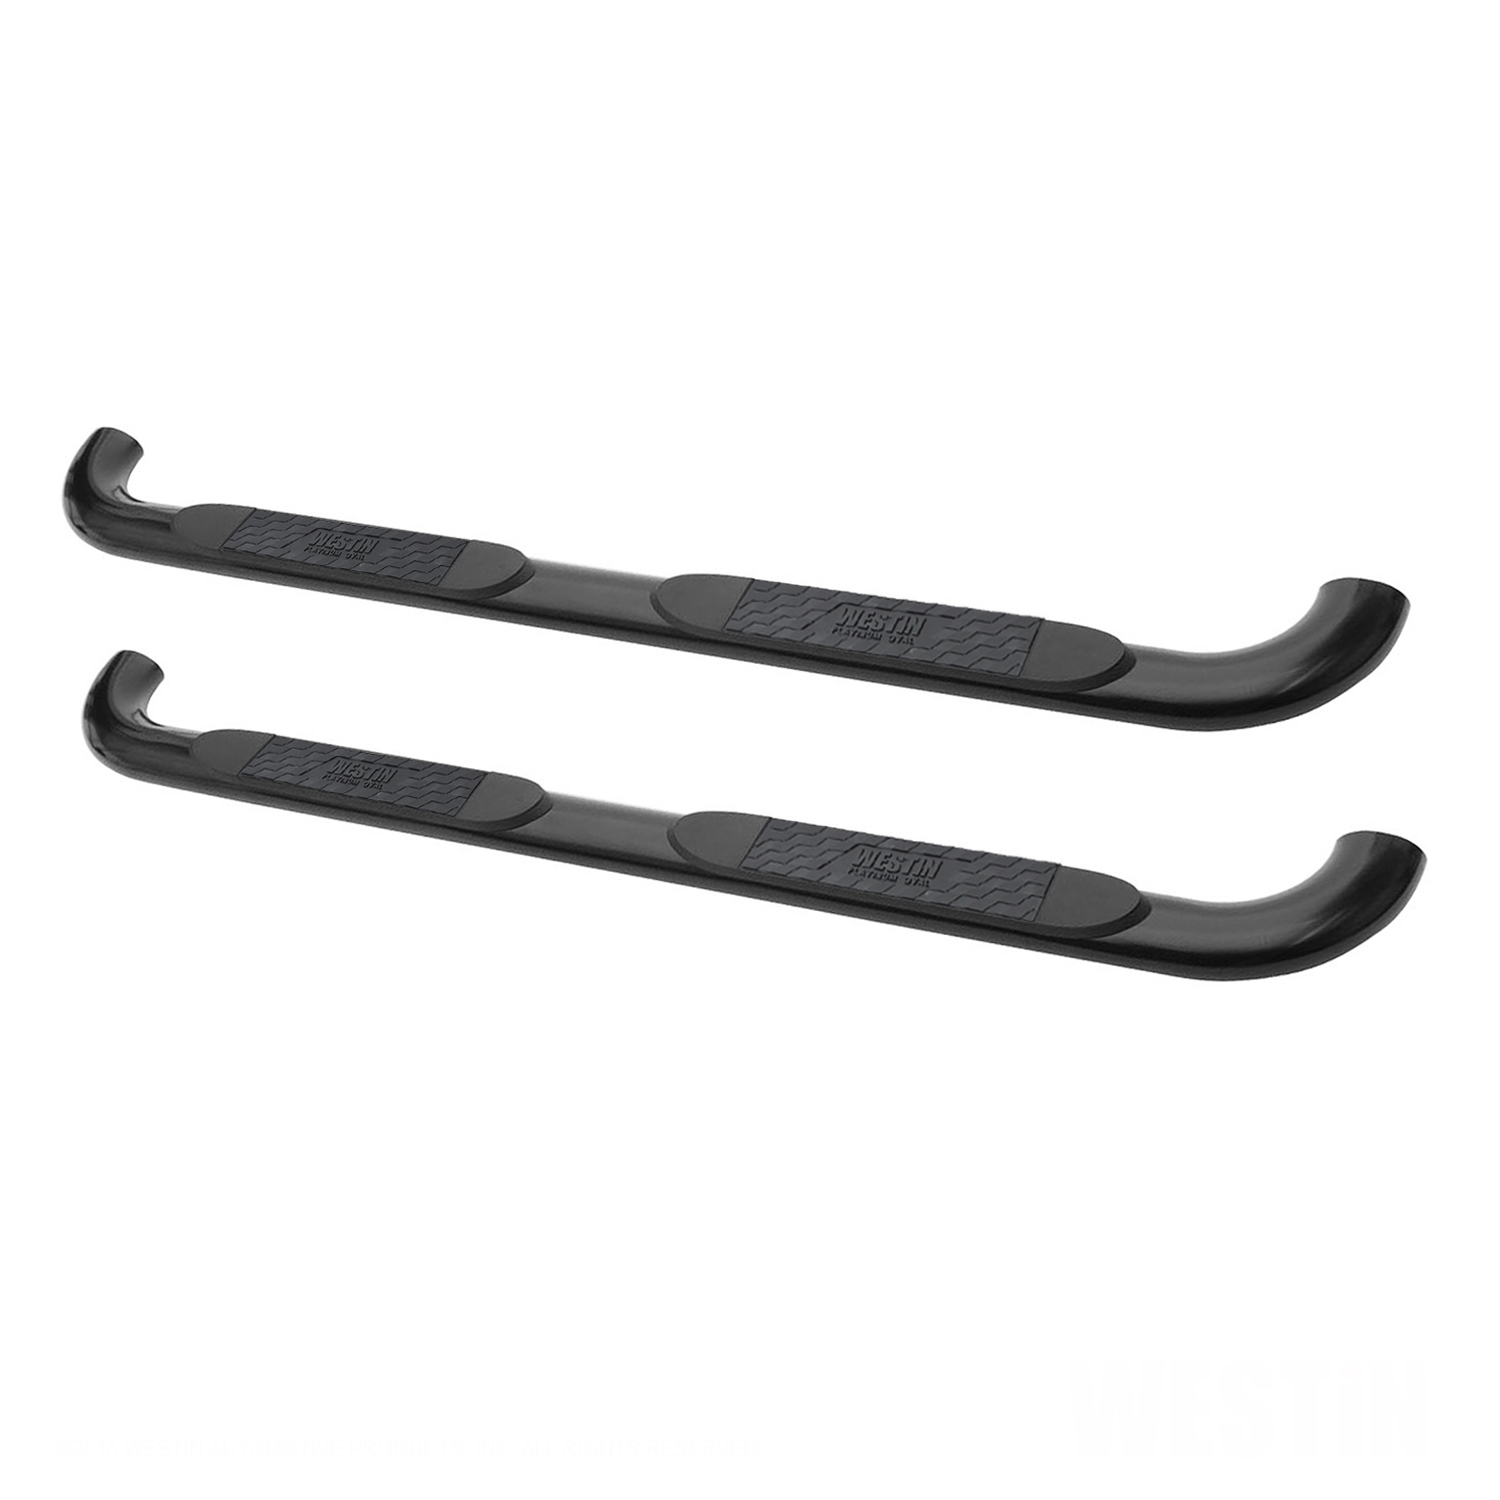 Platinum 4 Oval Nerf Bars Black | #21-3855 | Westin Automotive Products